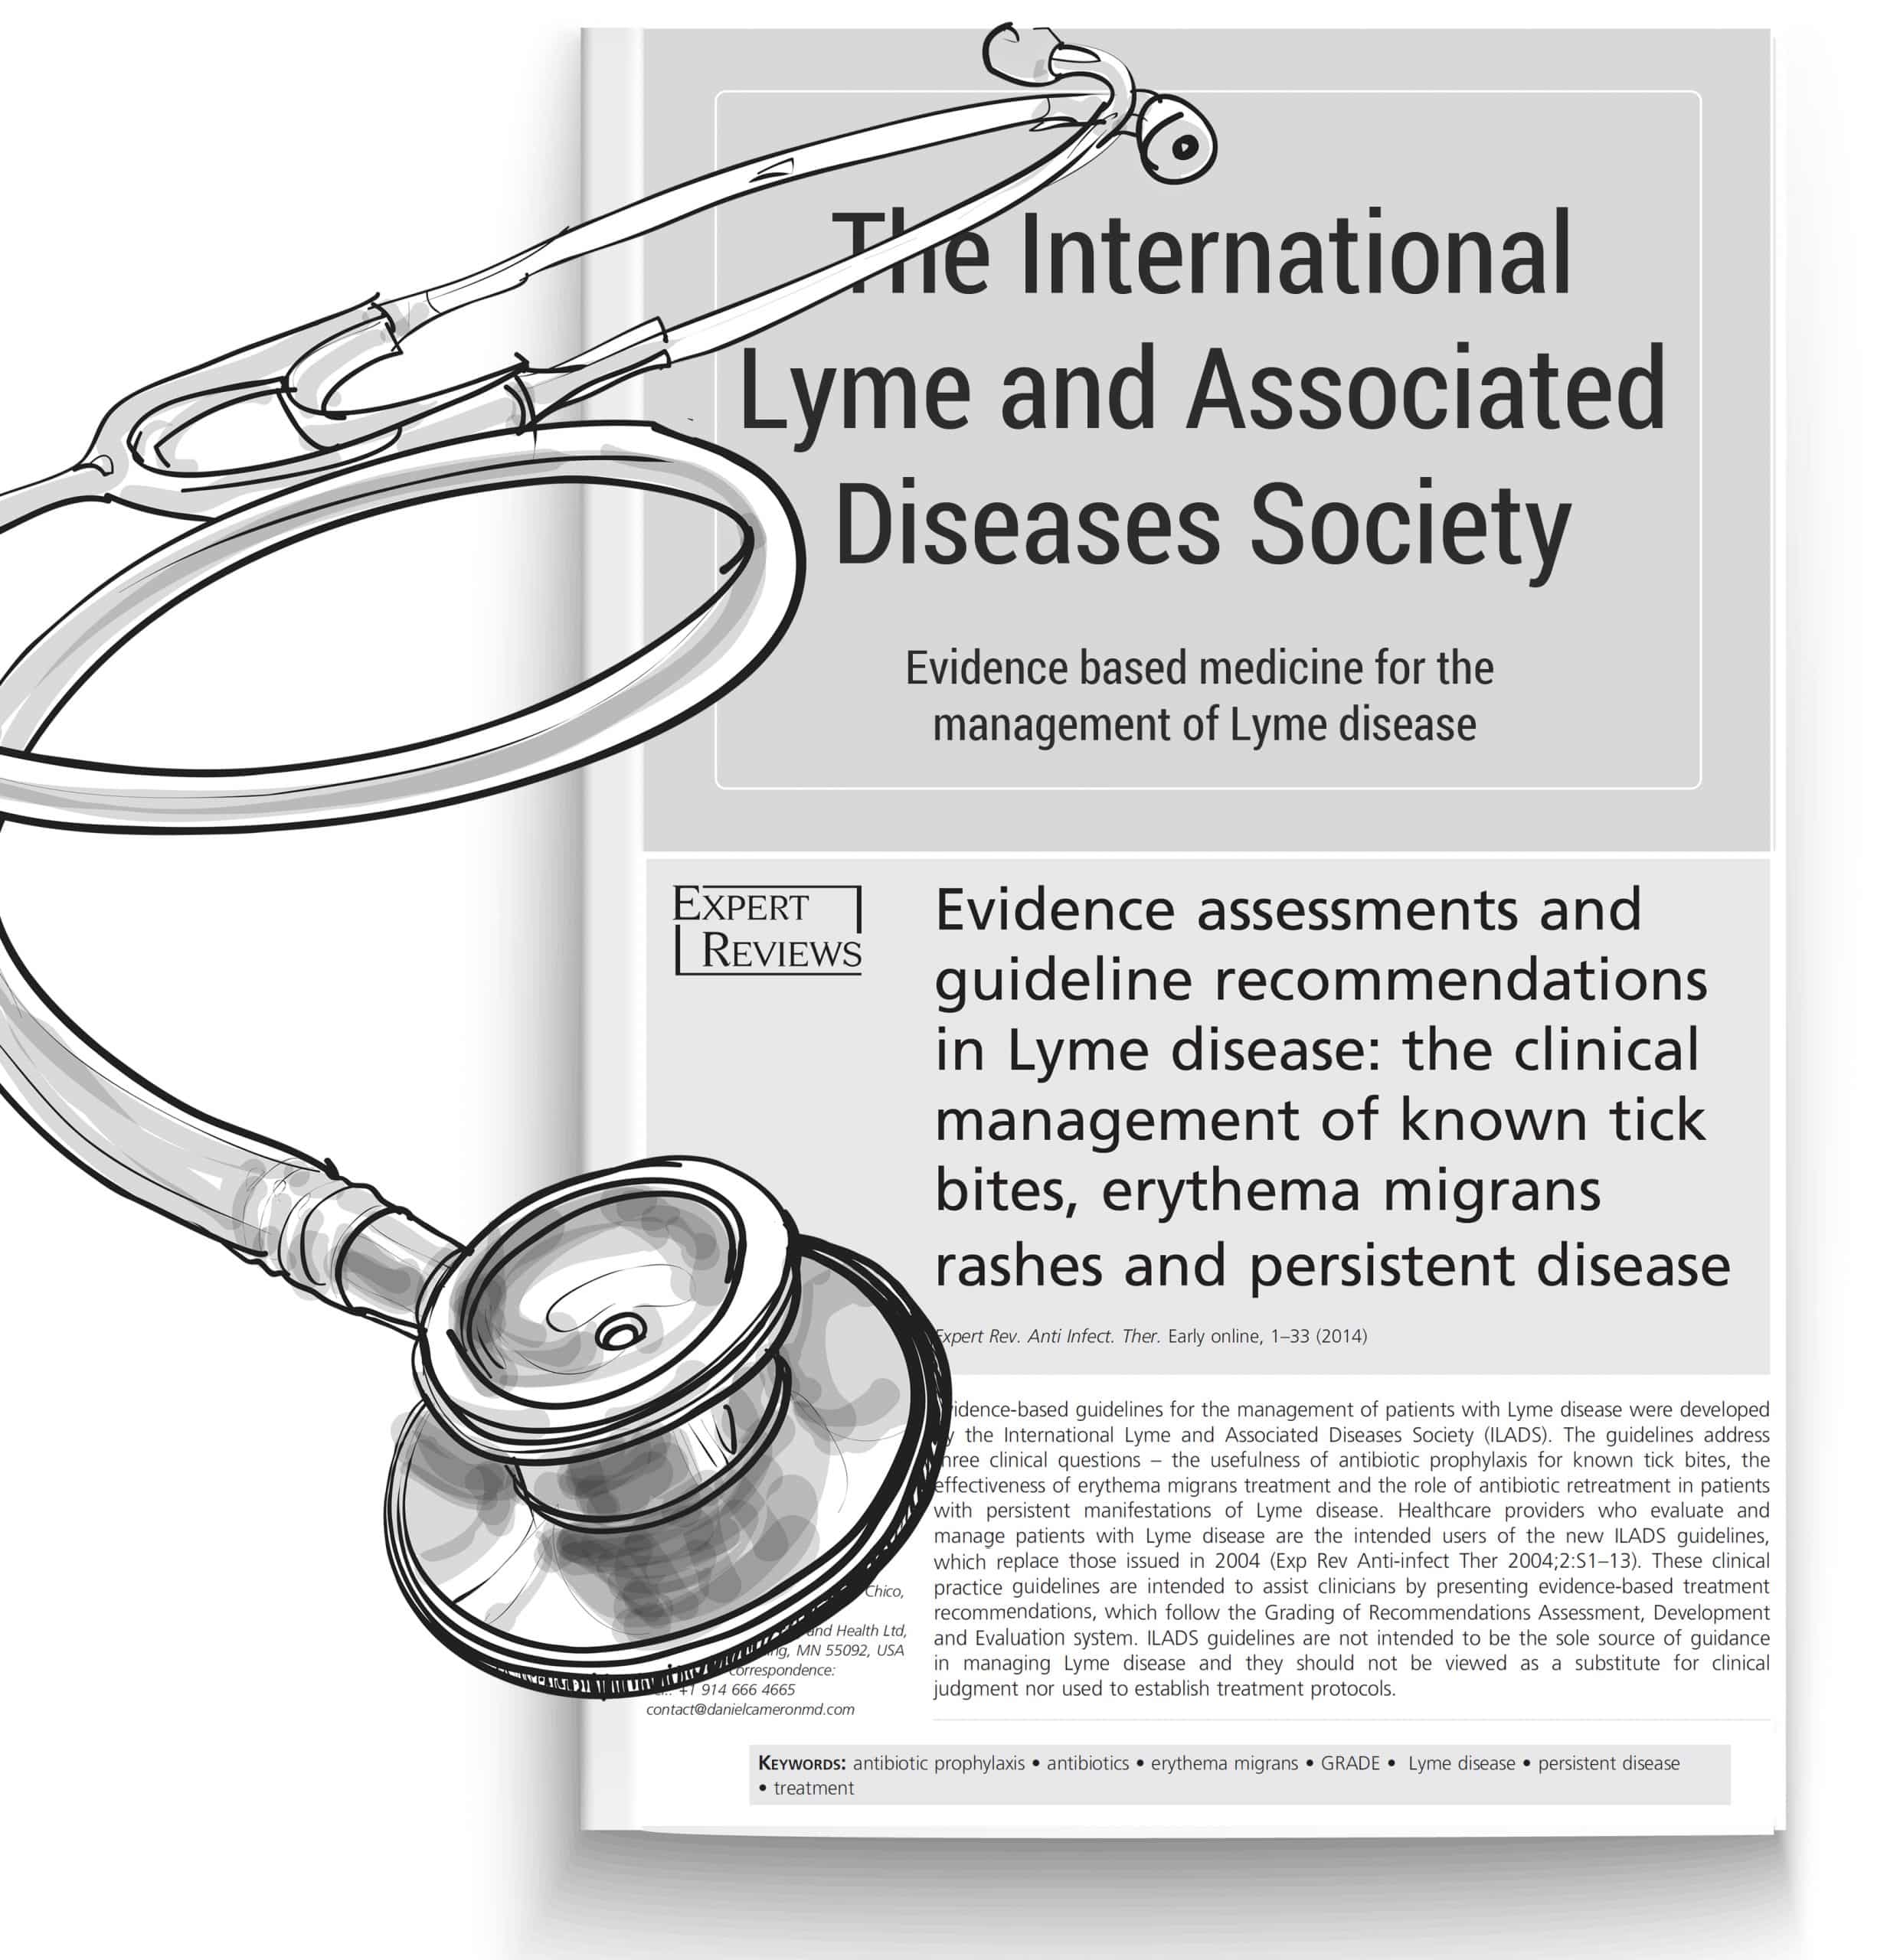 LymeDisease.org Endorses New Evidence